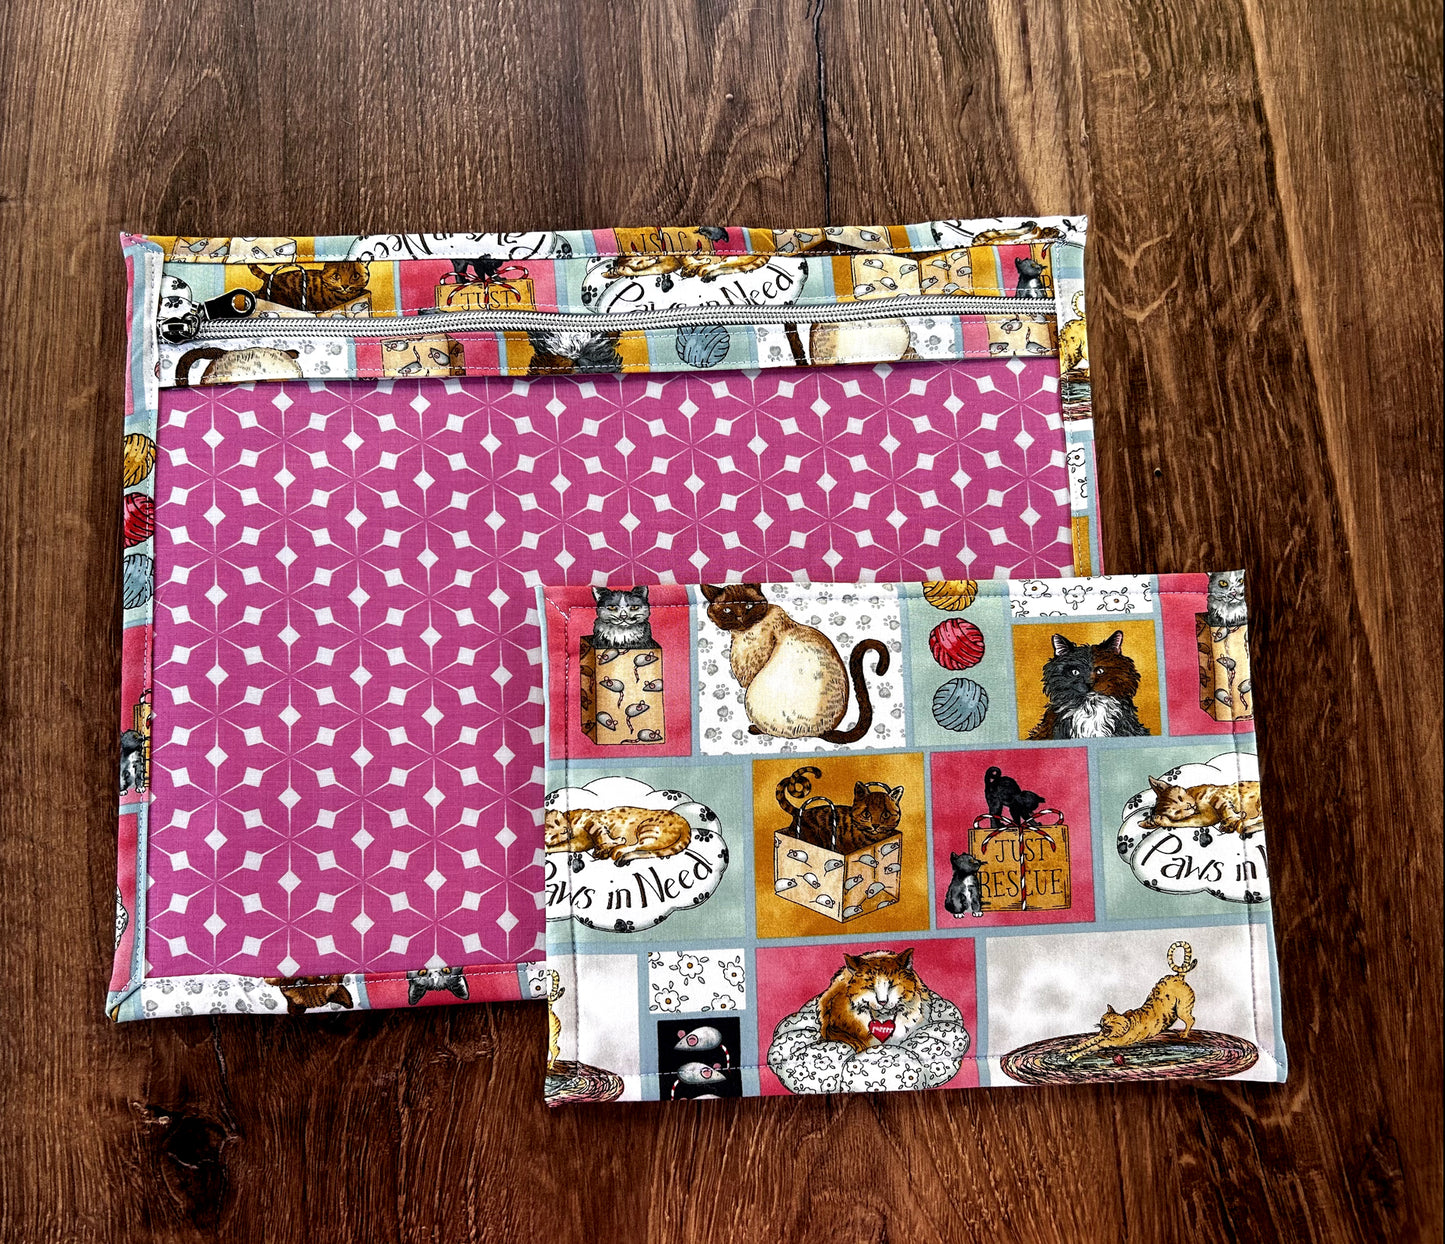 Vinyl Cross Stitch Project Bag - Project Bag - Knitting & Crochet Bag - Storage - Organizer - Rescue Cat Project Bag - Notions